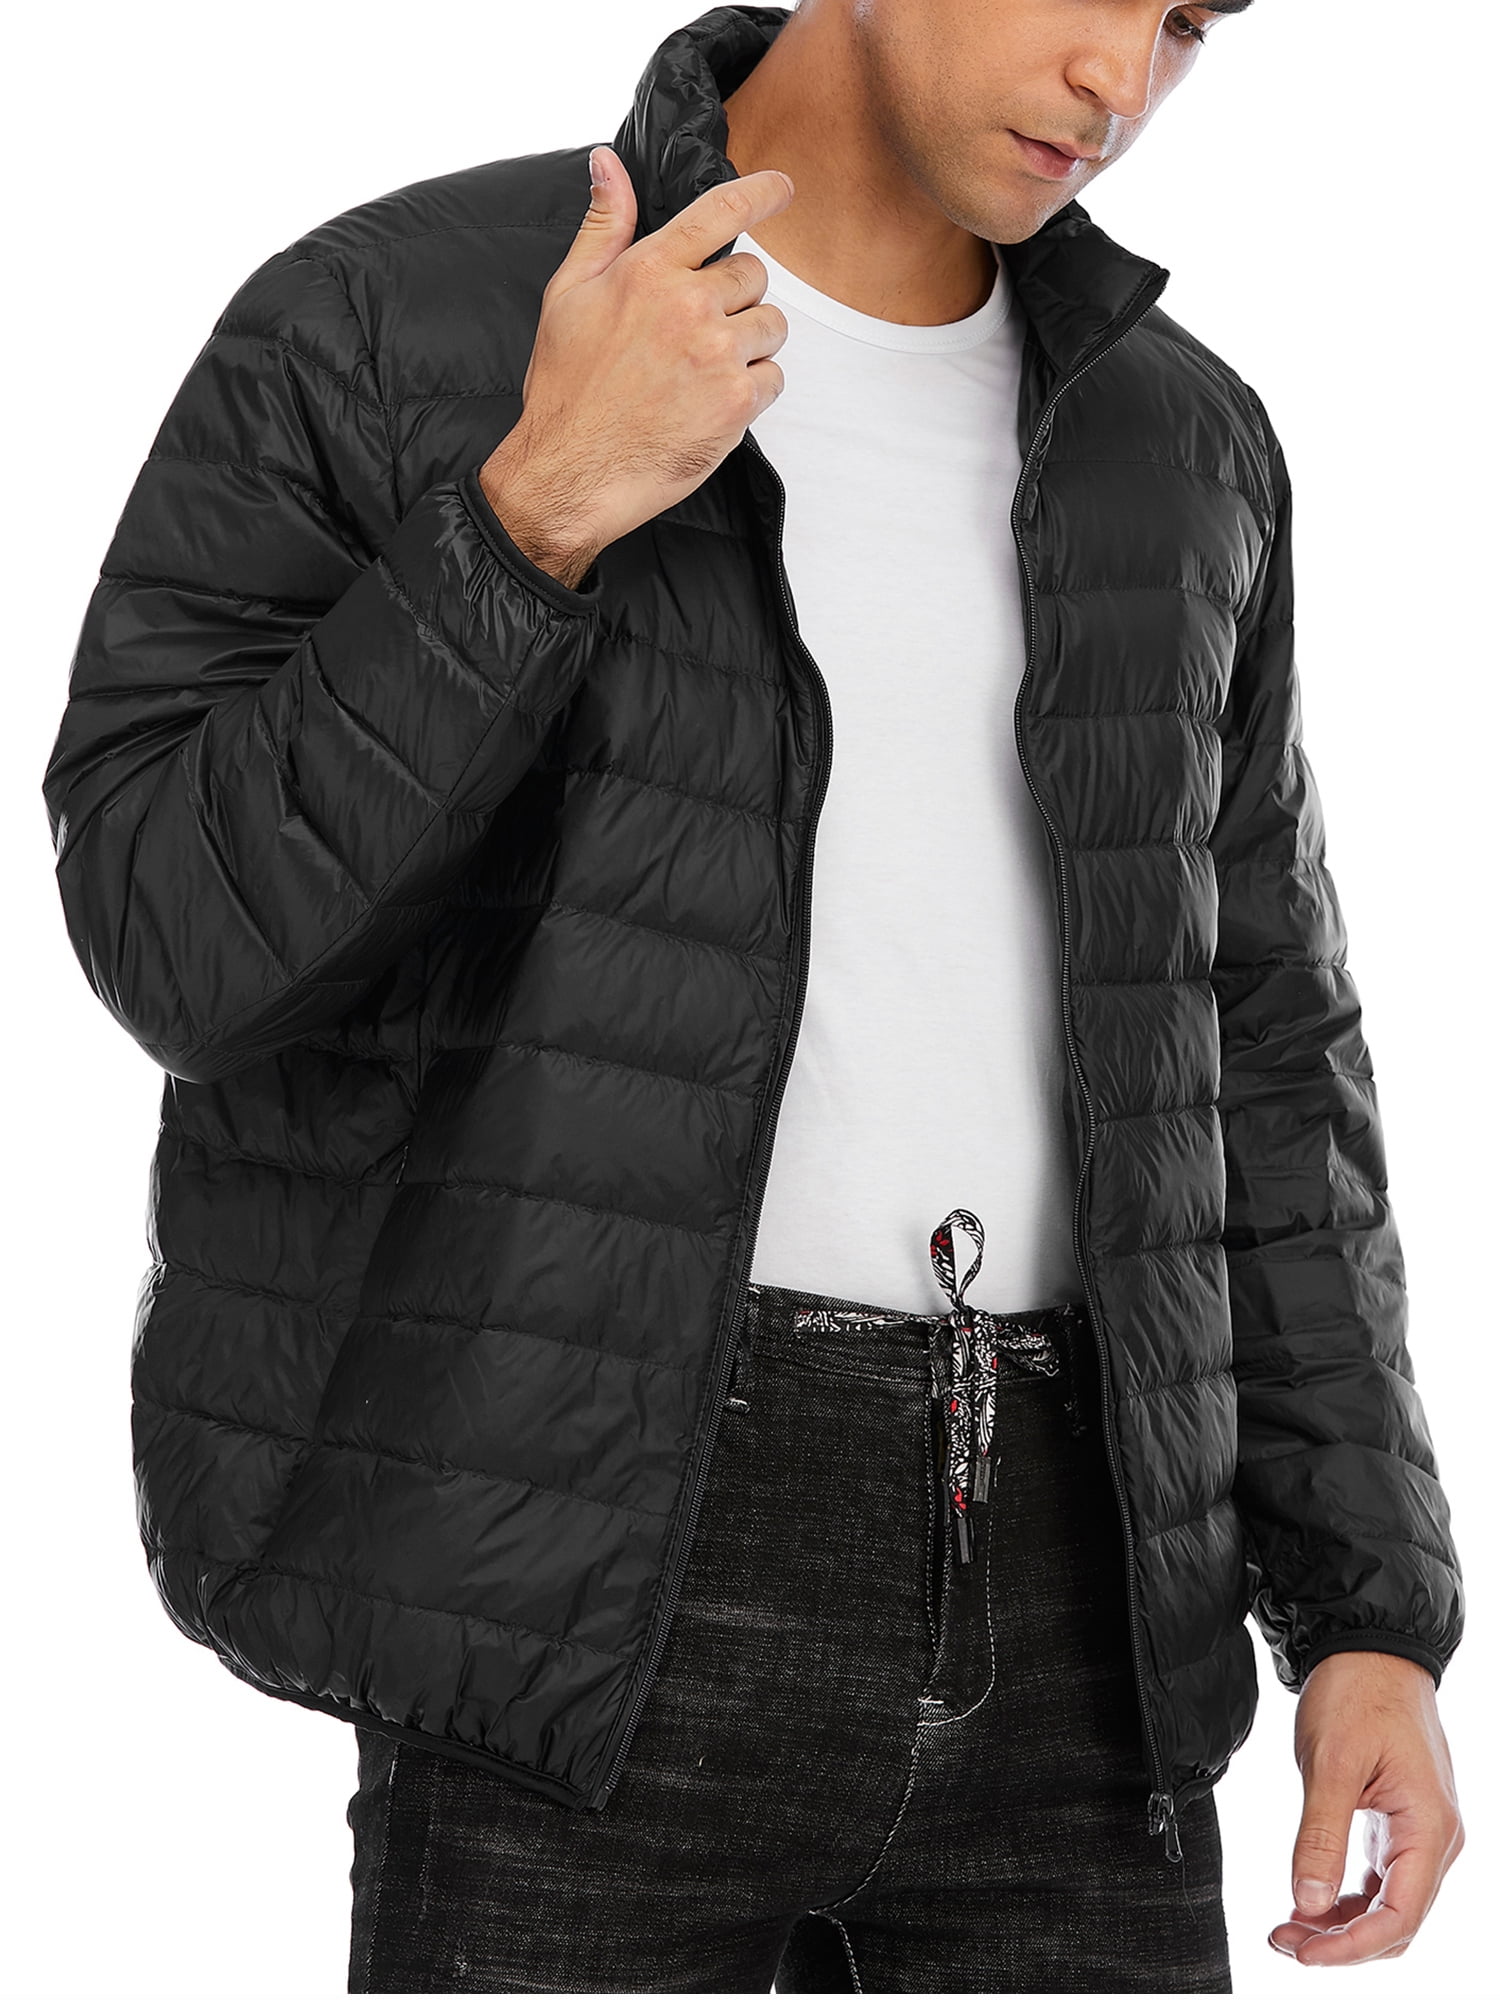 Mens Long Sleeve Solid Color Down Jacket Coats Winter Zipper Warm Down Jackets Packable Light Coat S-3XL